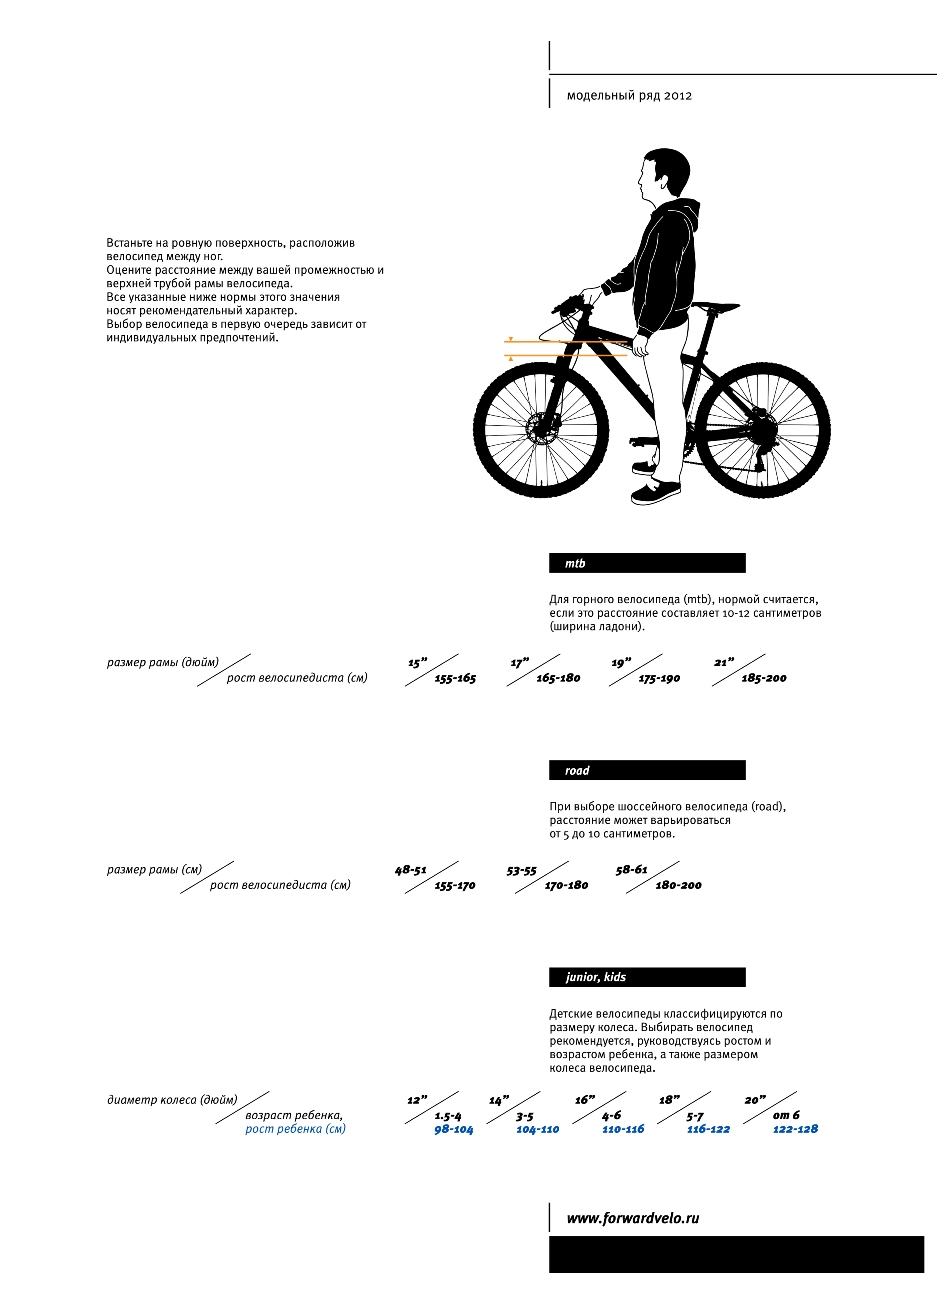 Как выбрать раму велосипеда. Размер рамы велосипеда по росту женщина. Таблица выбора велосипеда по росту и весу. Какой размер рамы выбрать для велосипеда рост 182. Схема подбора велосипеда по росту таблица.